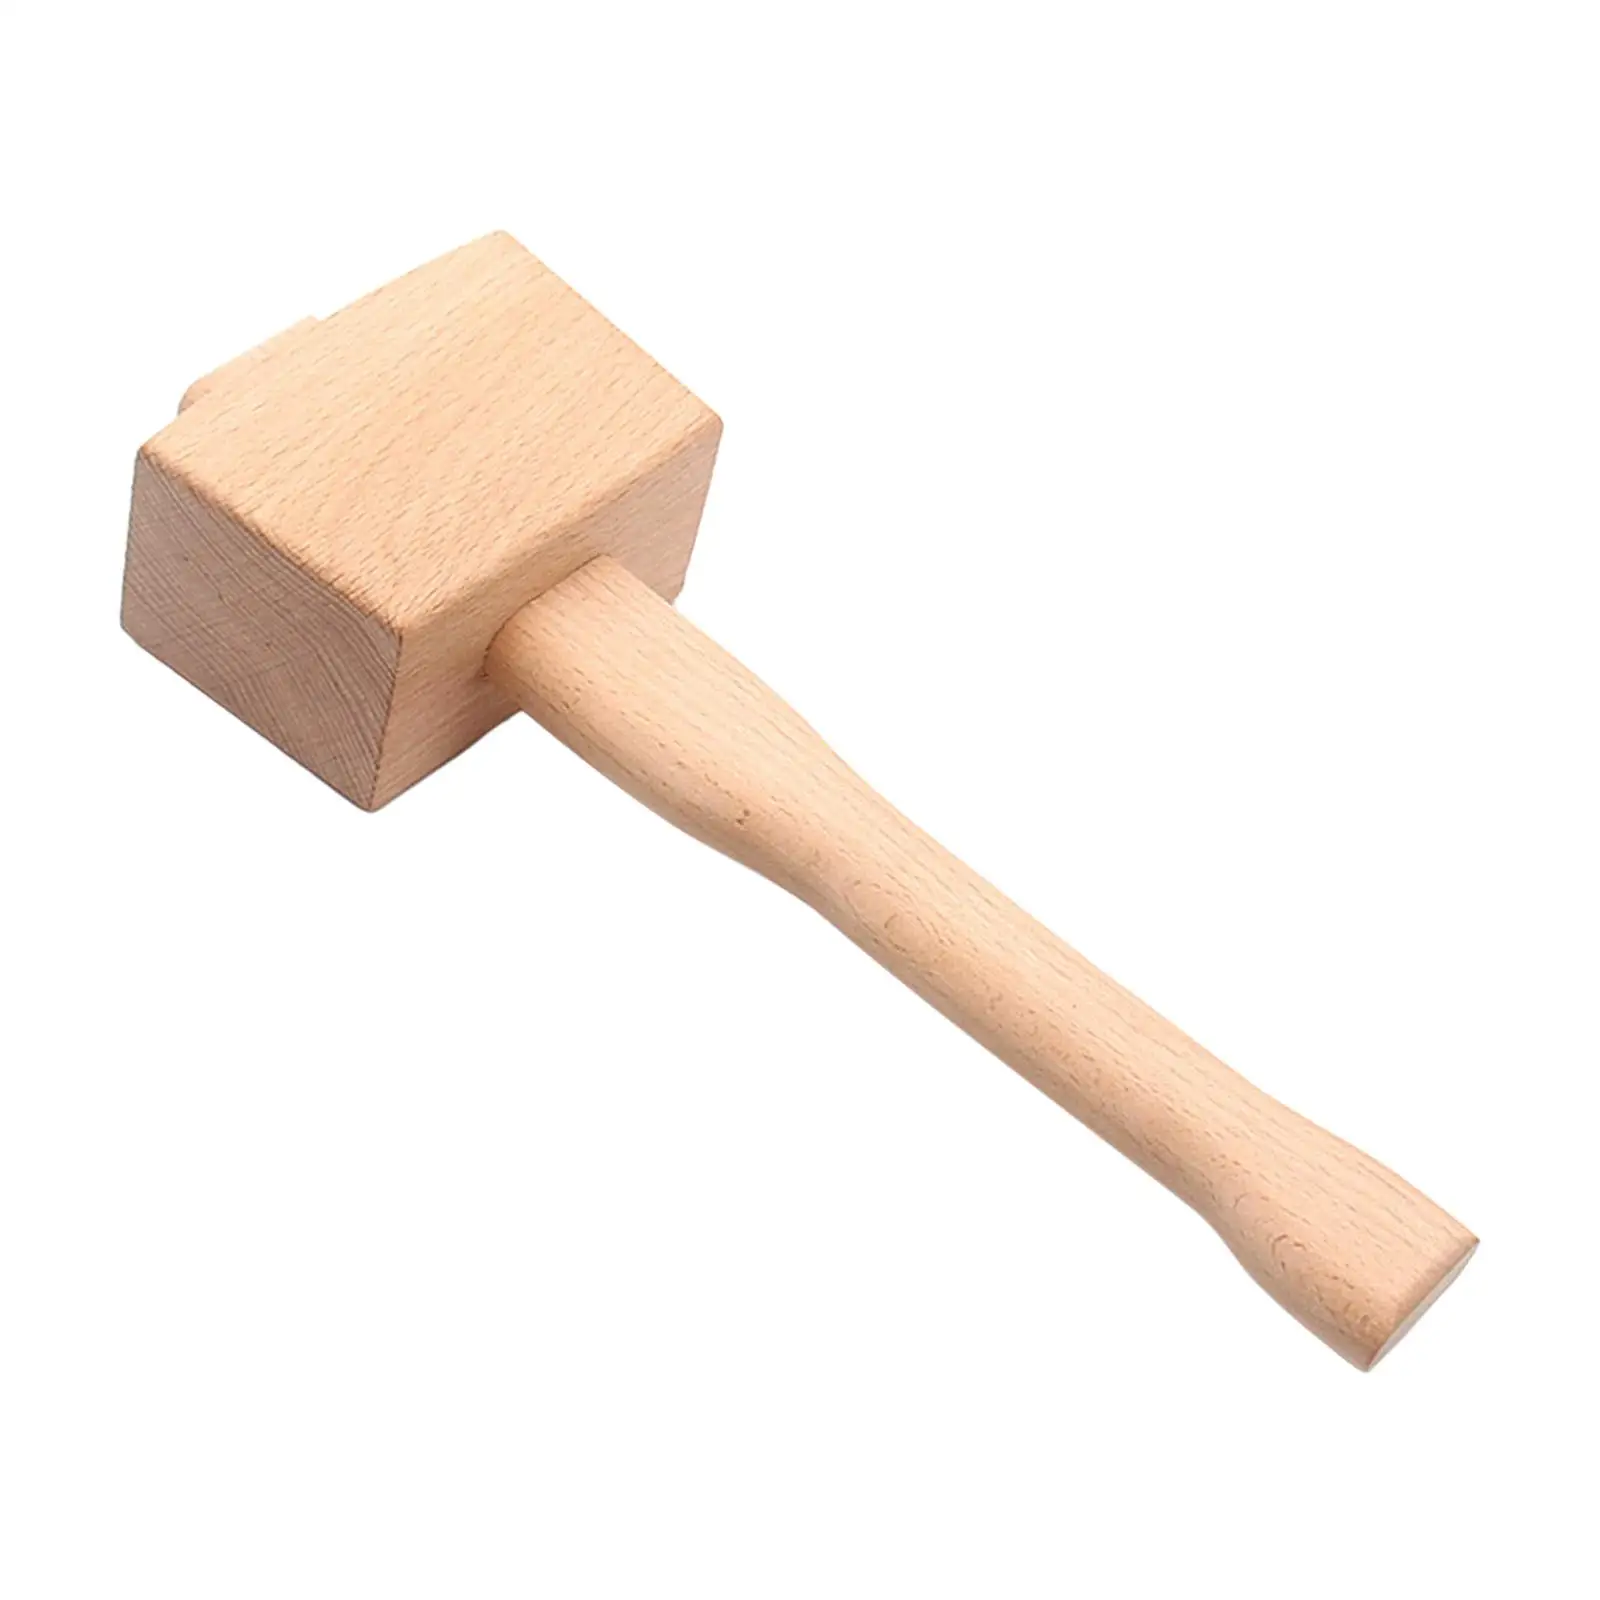 Beech Solid Wood Mallet Mallet Portable Vintage Wooden Mallet Wooden Hammer for Carpenter